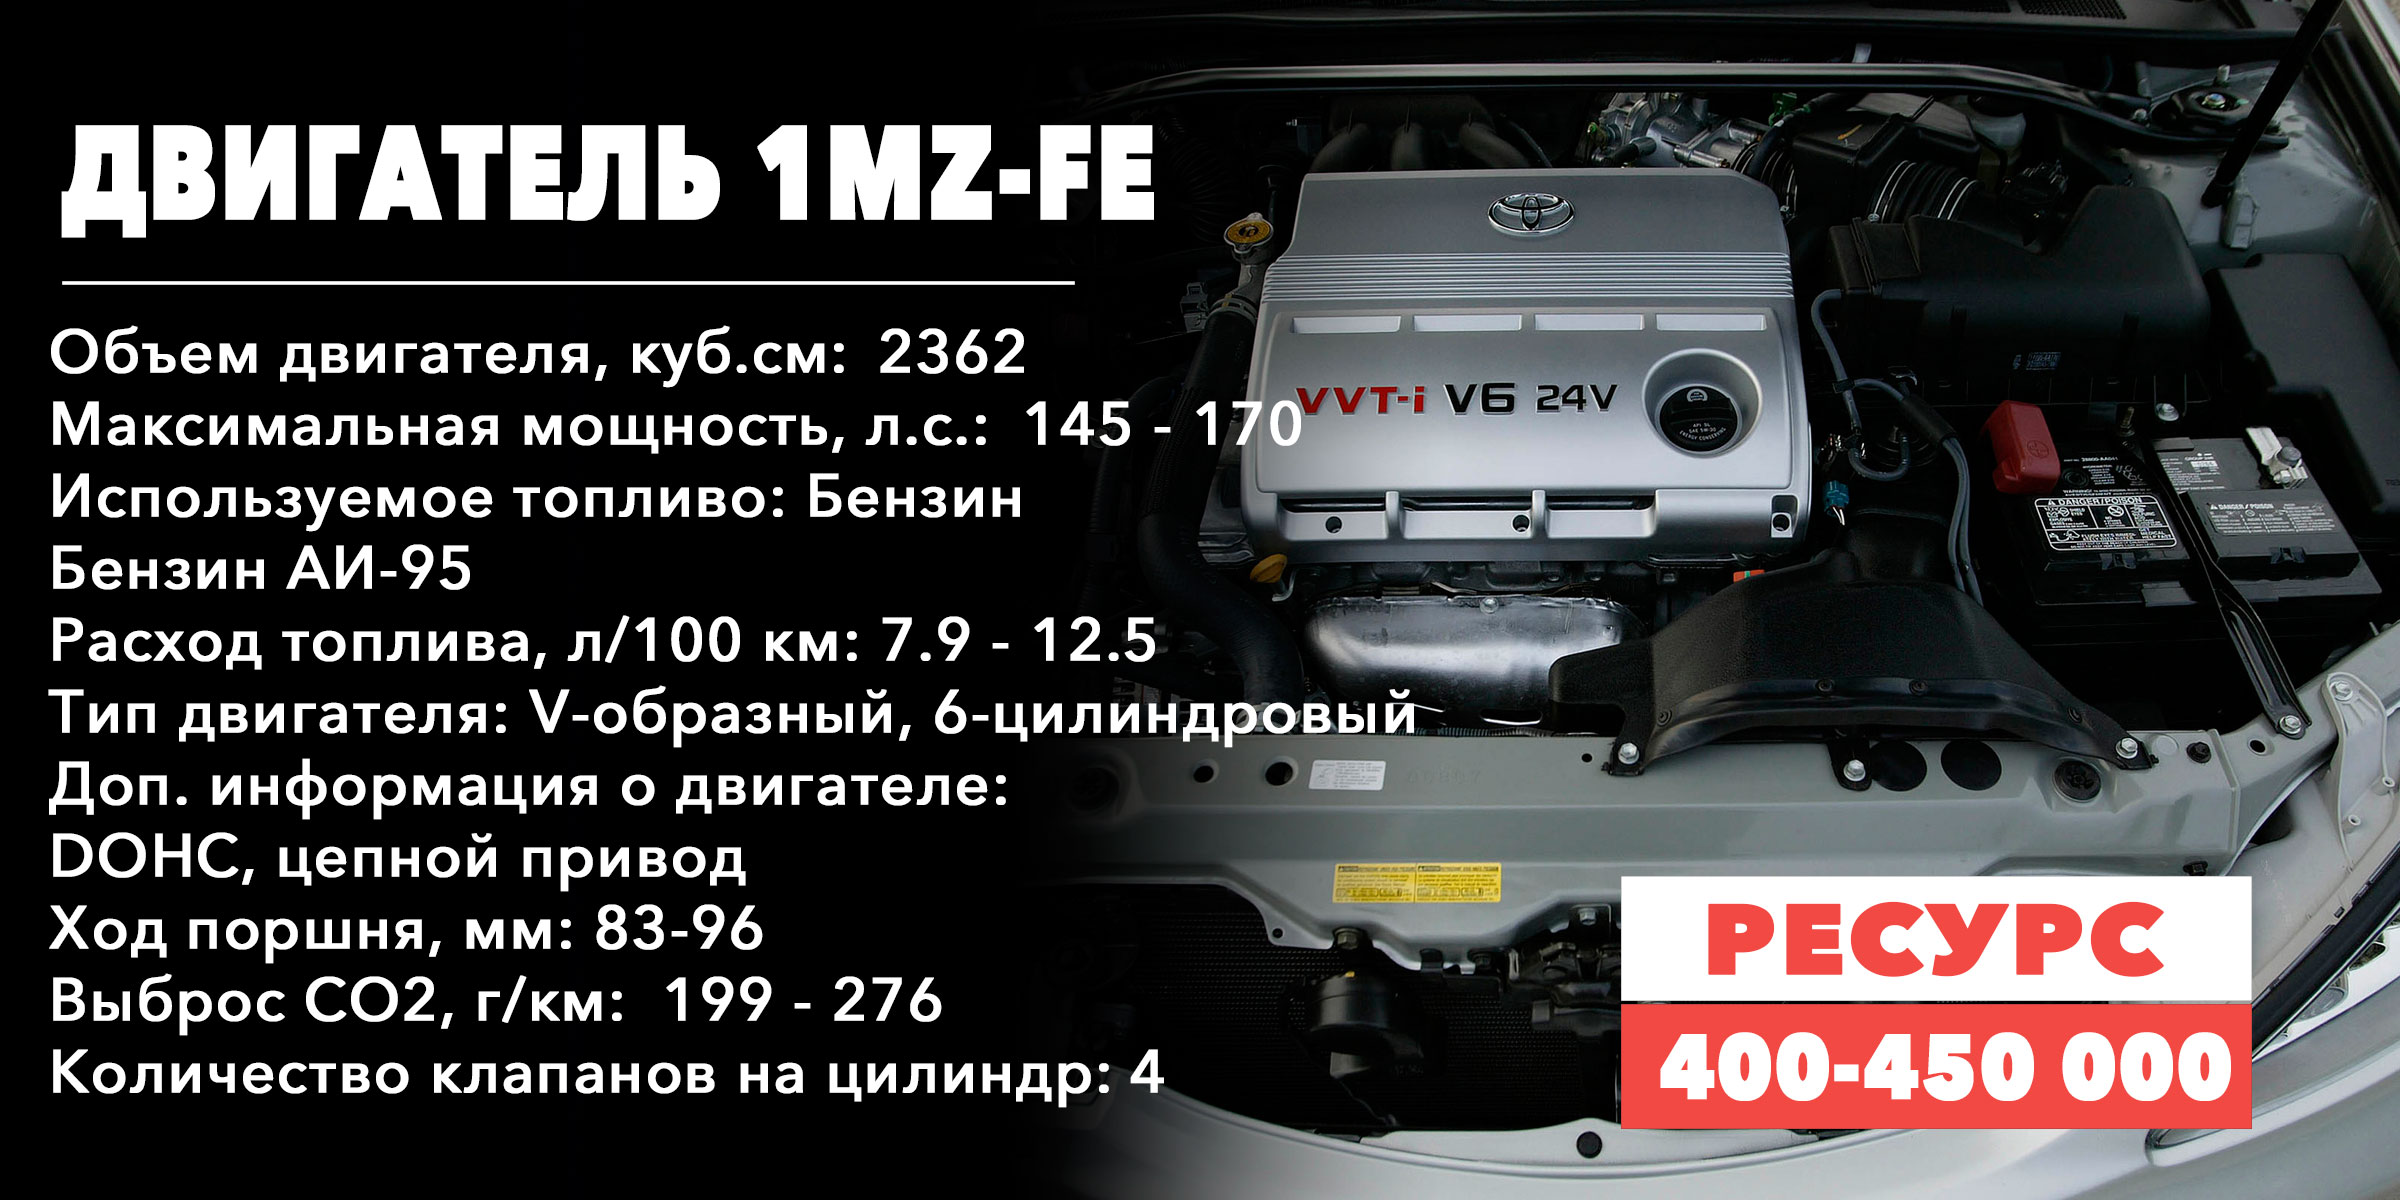 Ресурс моторов семейства MZ (1MZ-FE)